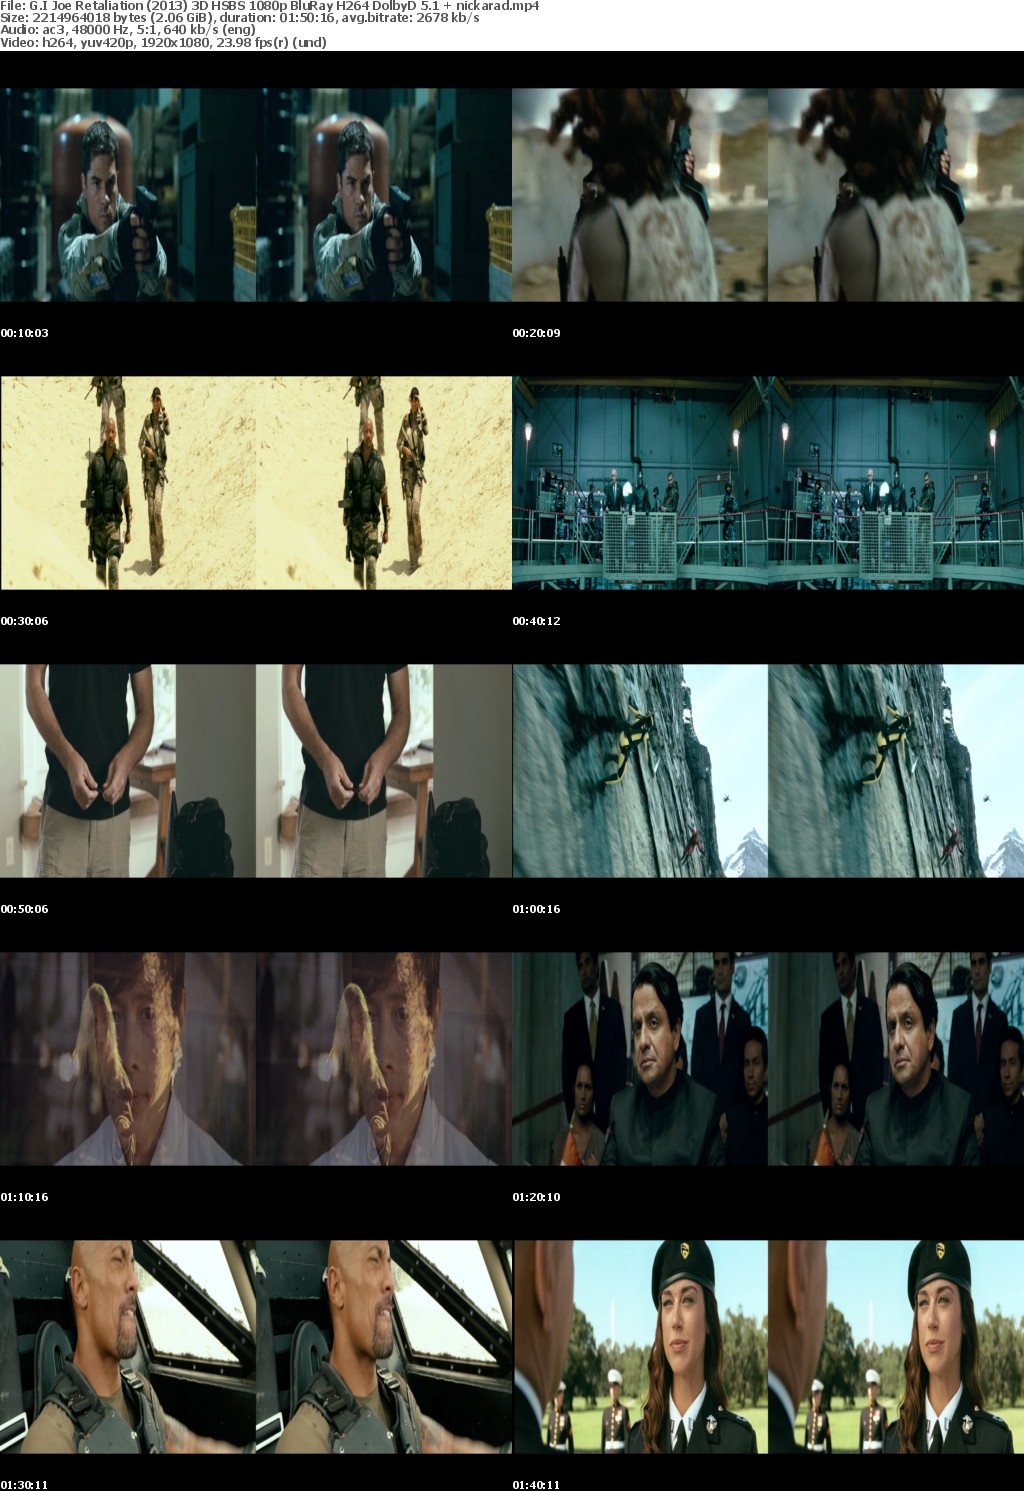 G I Joe Retaliation (2013) 3D HSBS 1080p BluRay H264 DolbyD 5 1 nickarad